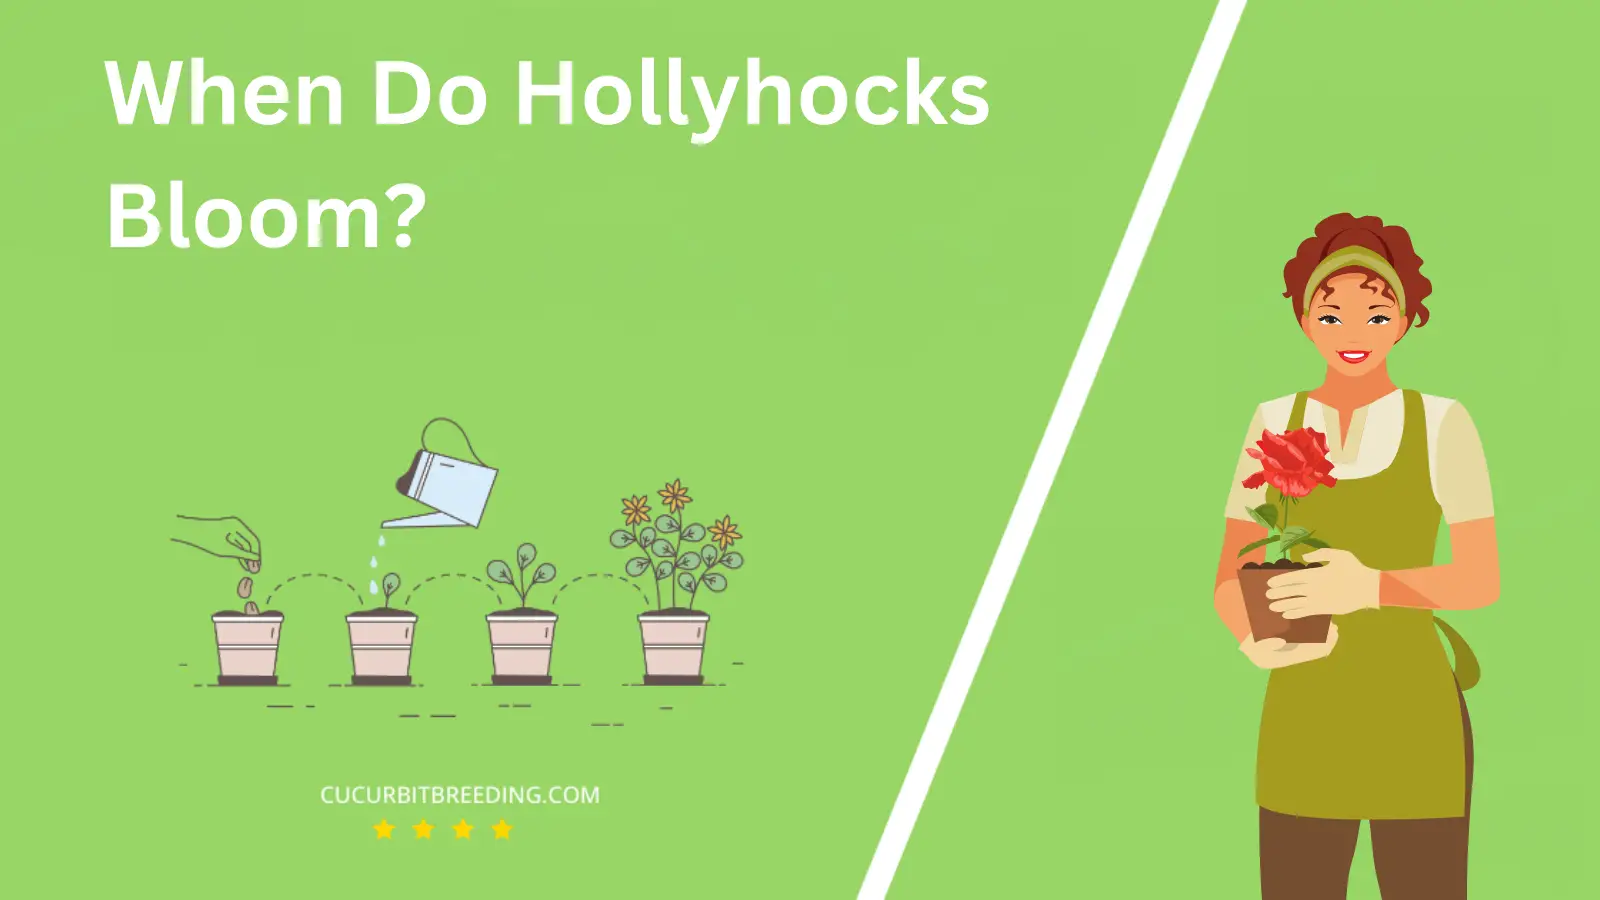 When Do Hollyhocks Bloom?